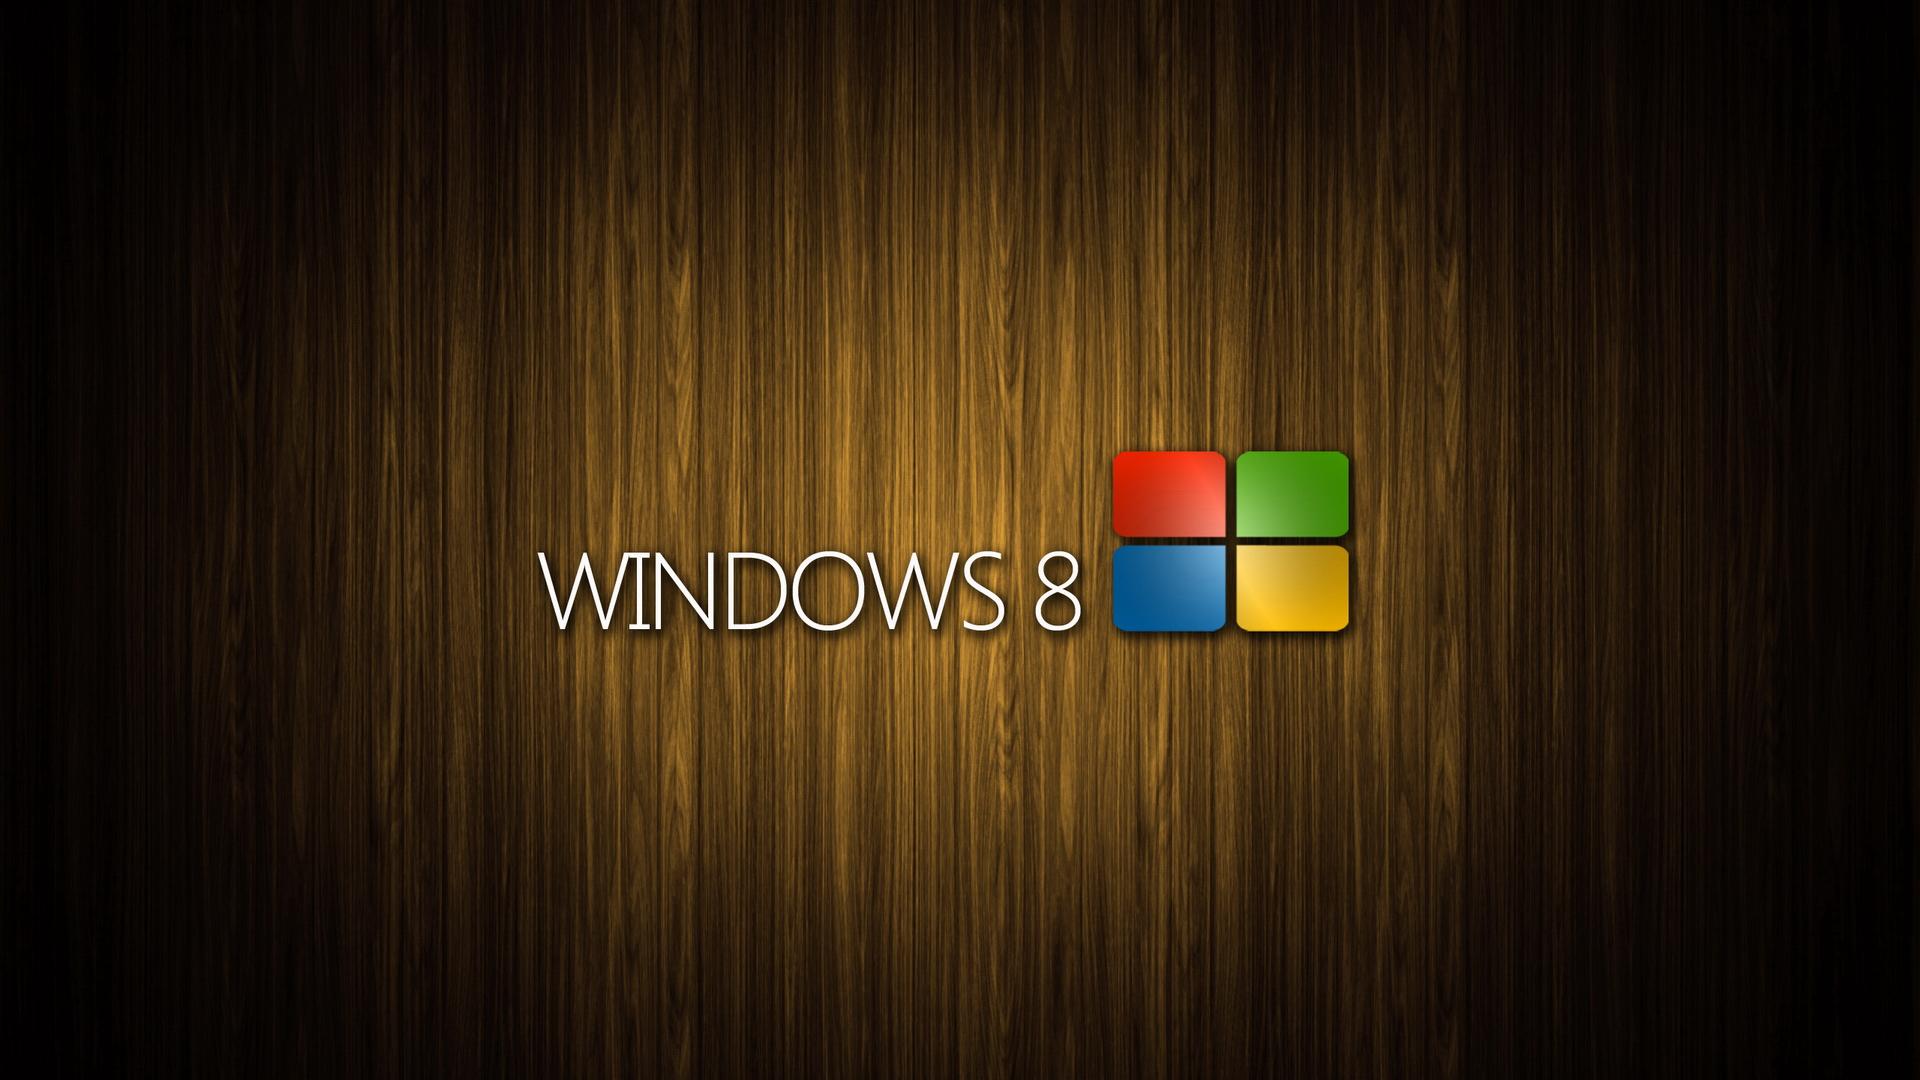 Windows 8 Wooden Image #17459 Wallpaper | High Resolution ...